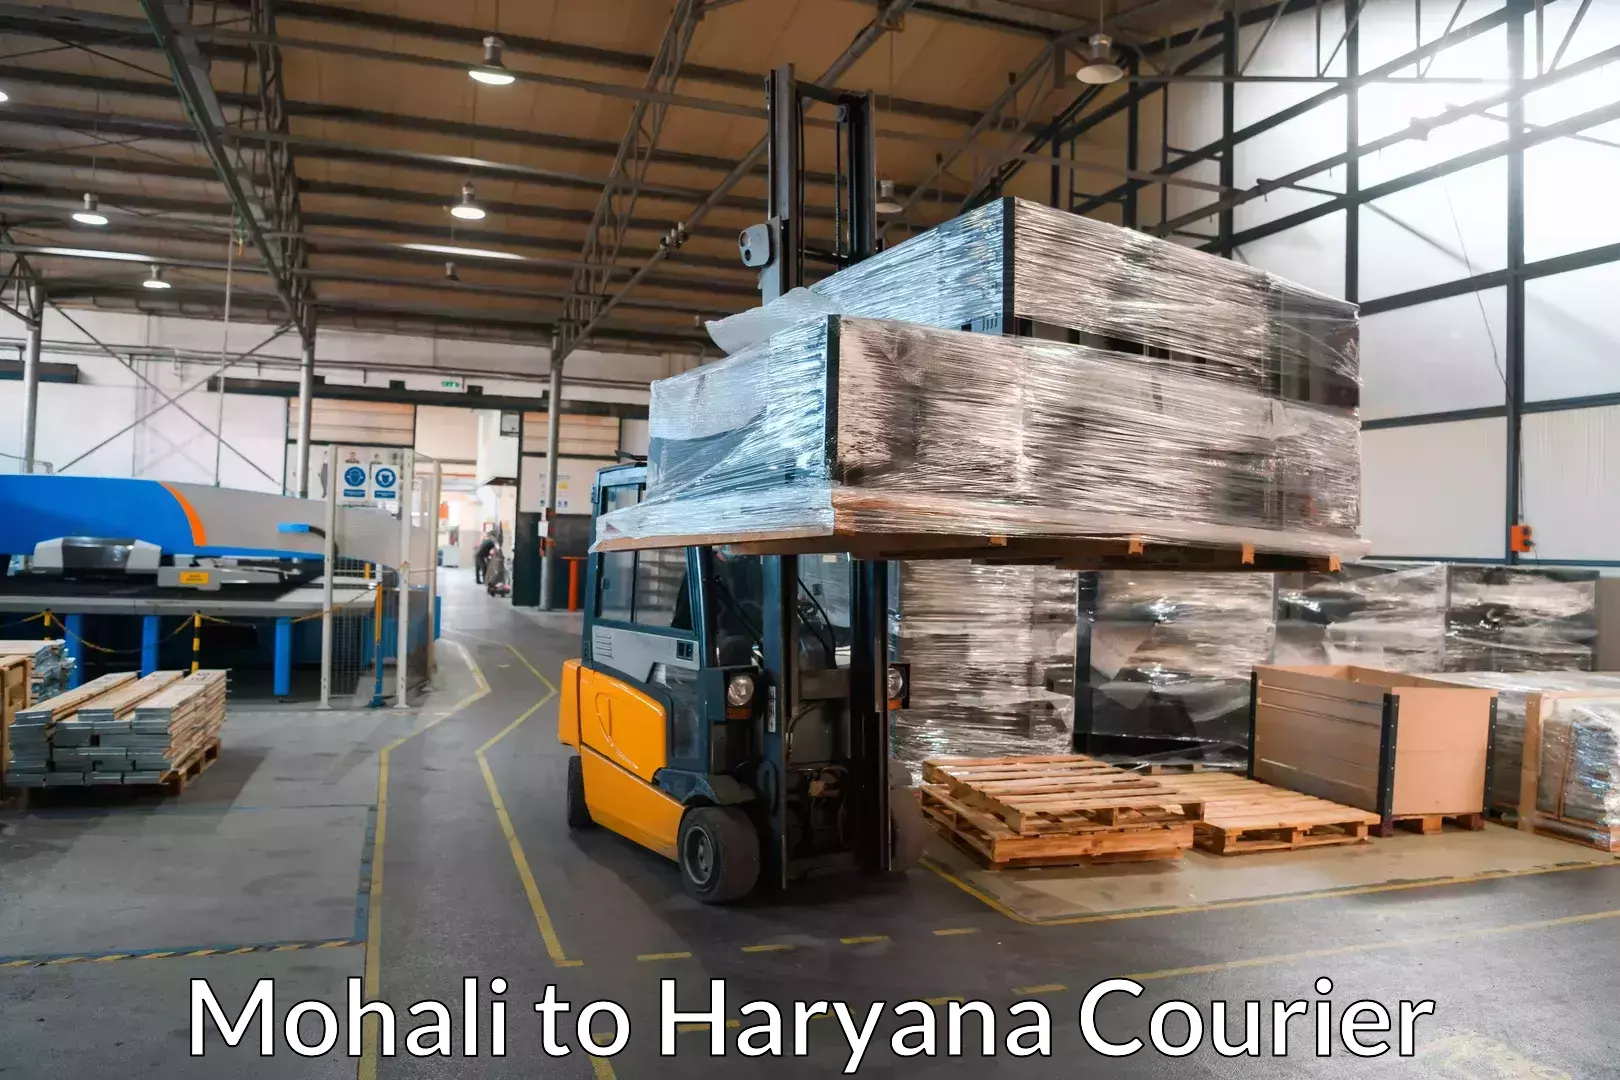 Professional moving company Mohali to Jhajjar